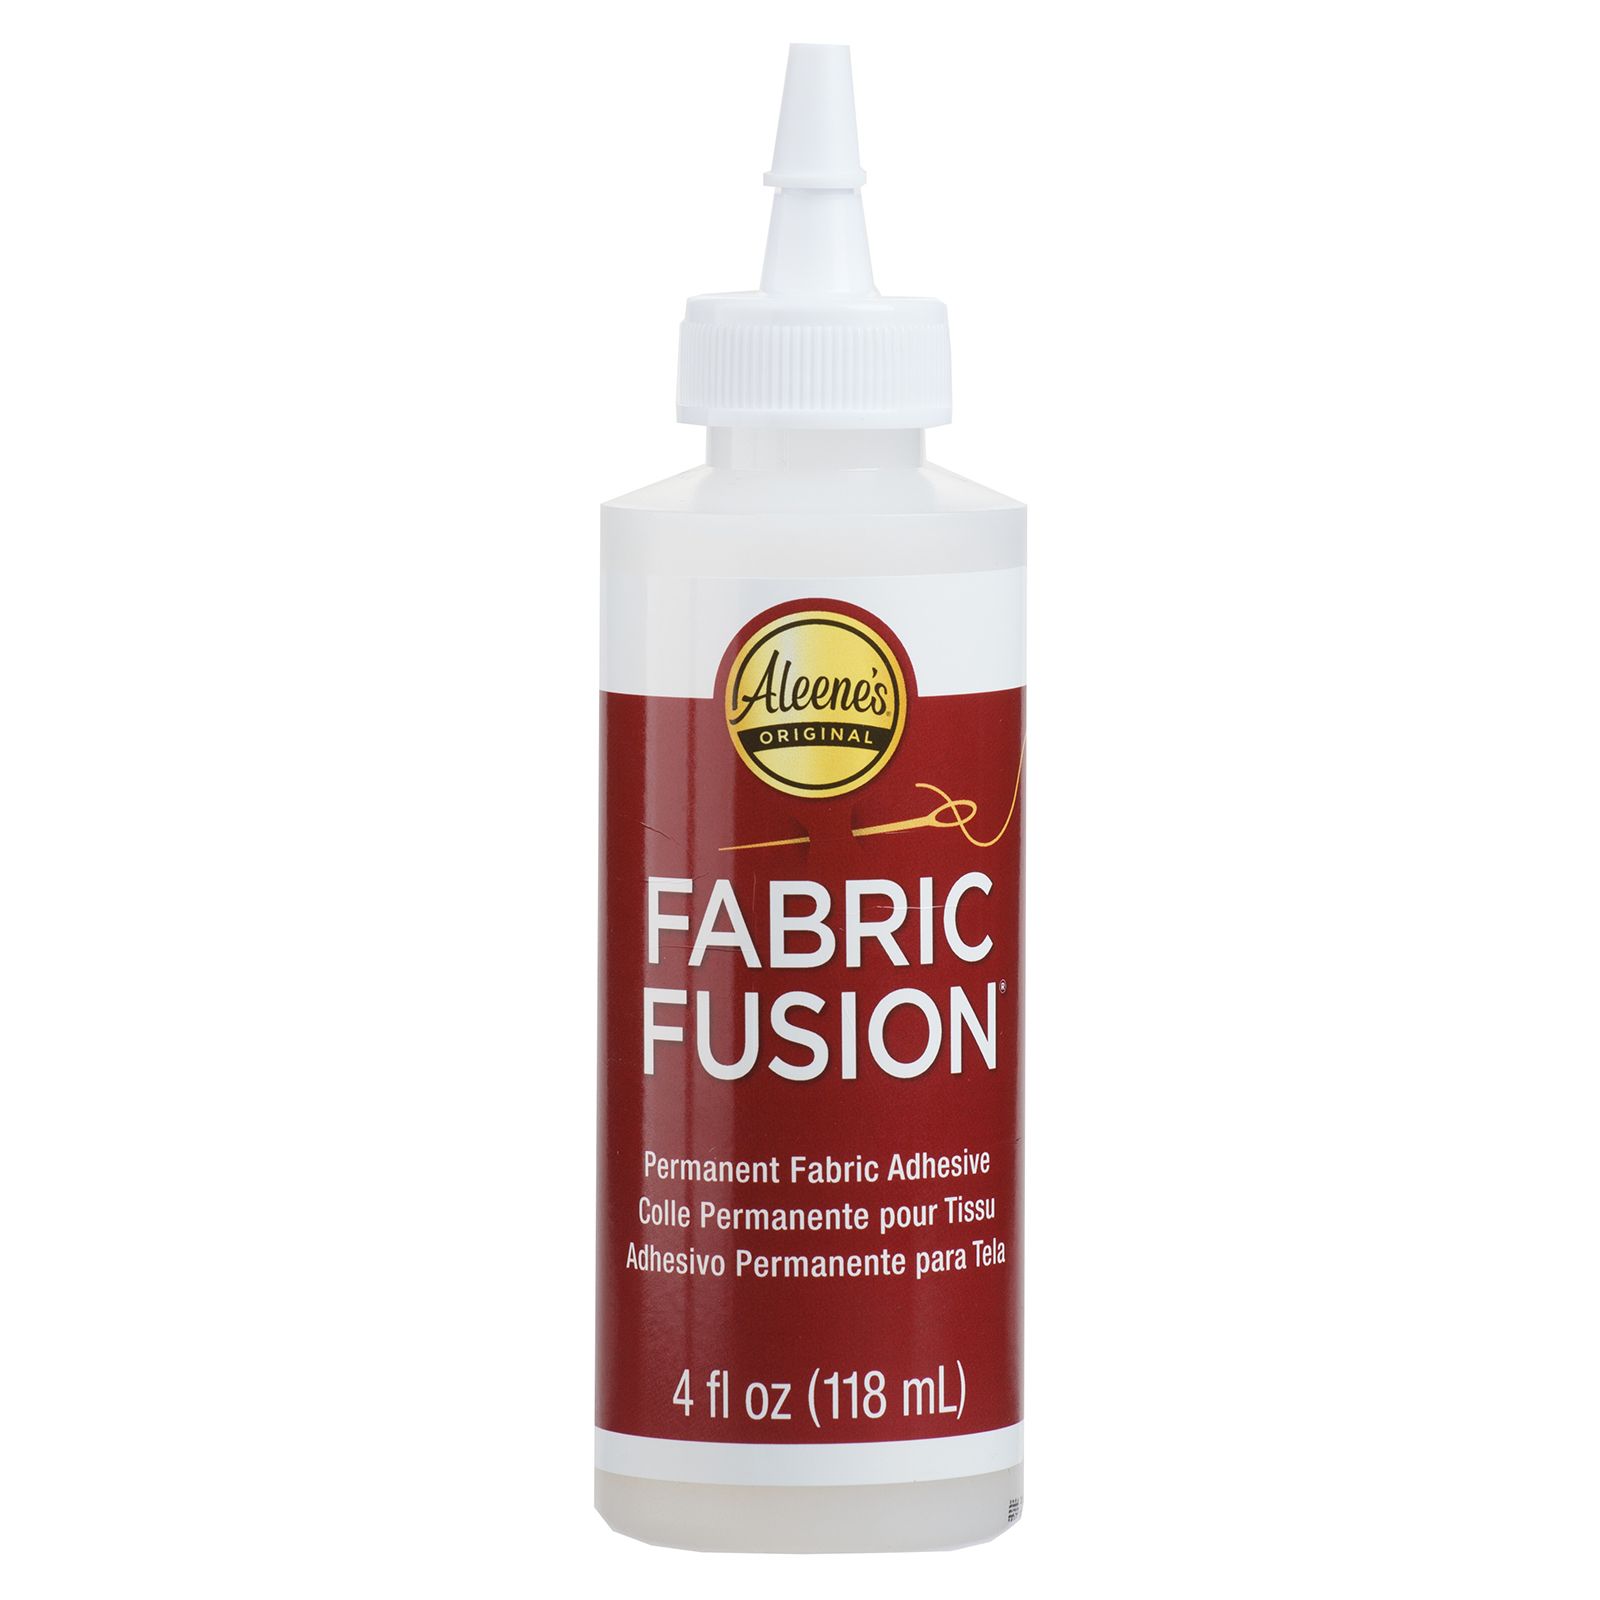 Aleene's • Fabric fusion glue permanent glue 118ml